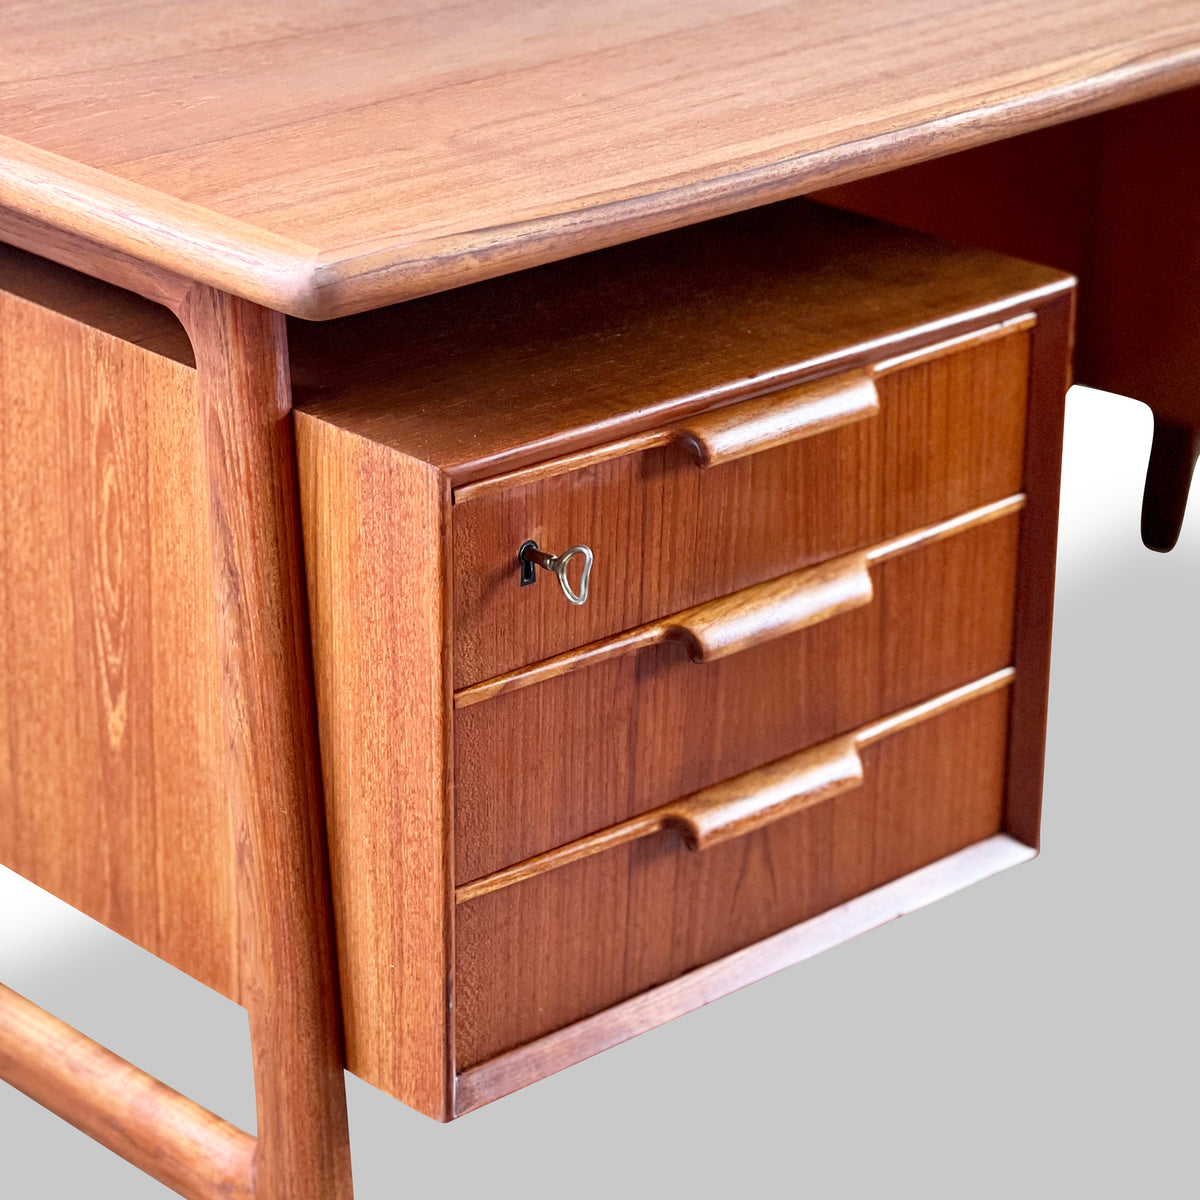 Teak Model 75 Desk by Gunni Omann, 1960s